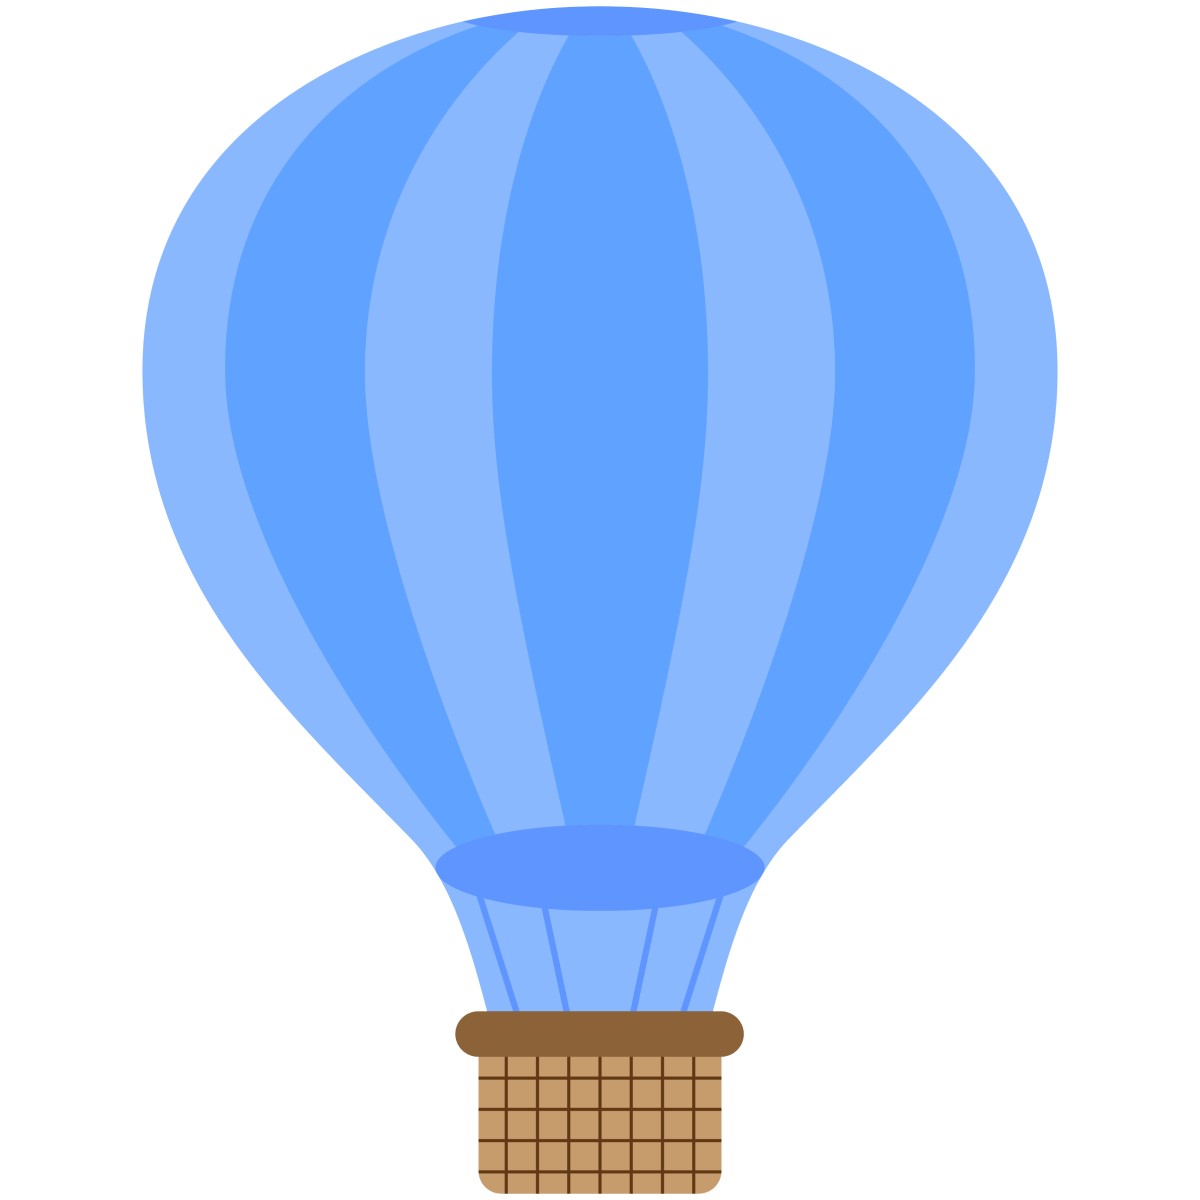 Hot Air Balloon (4ft)